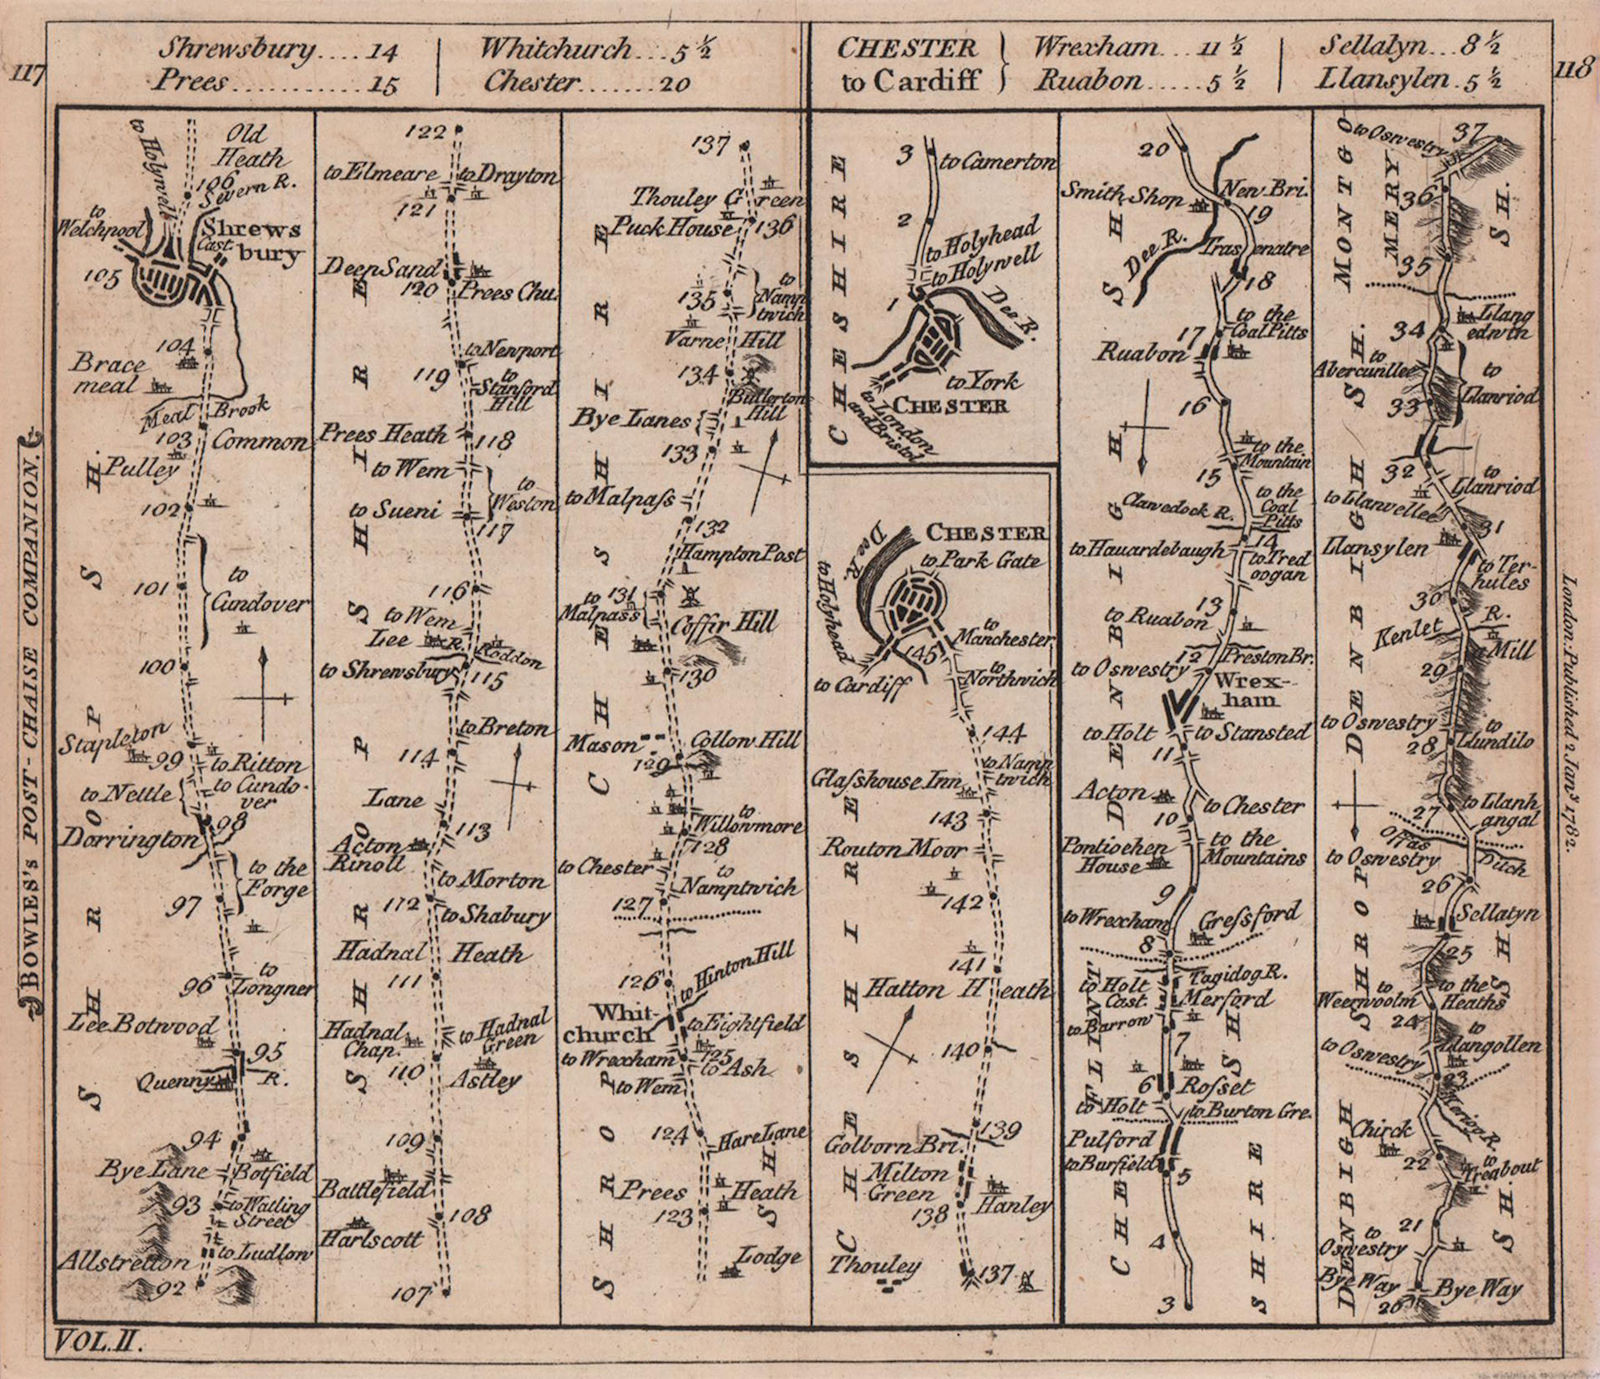 Shrewsbury-Chester-Wrexham-Sellattyn-Llansilin road strip map. BOWLES 1782